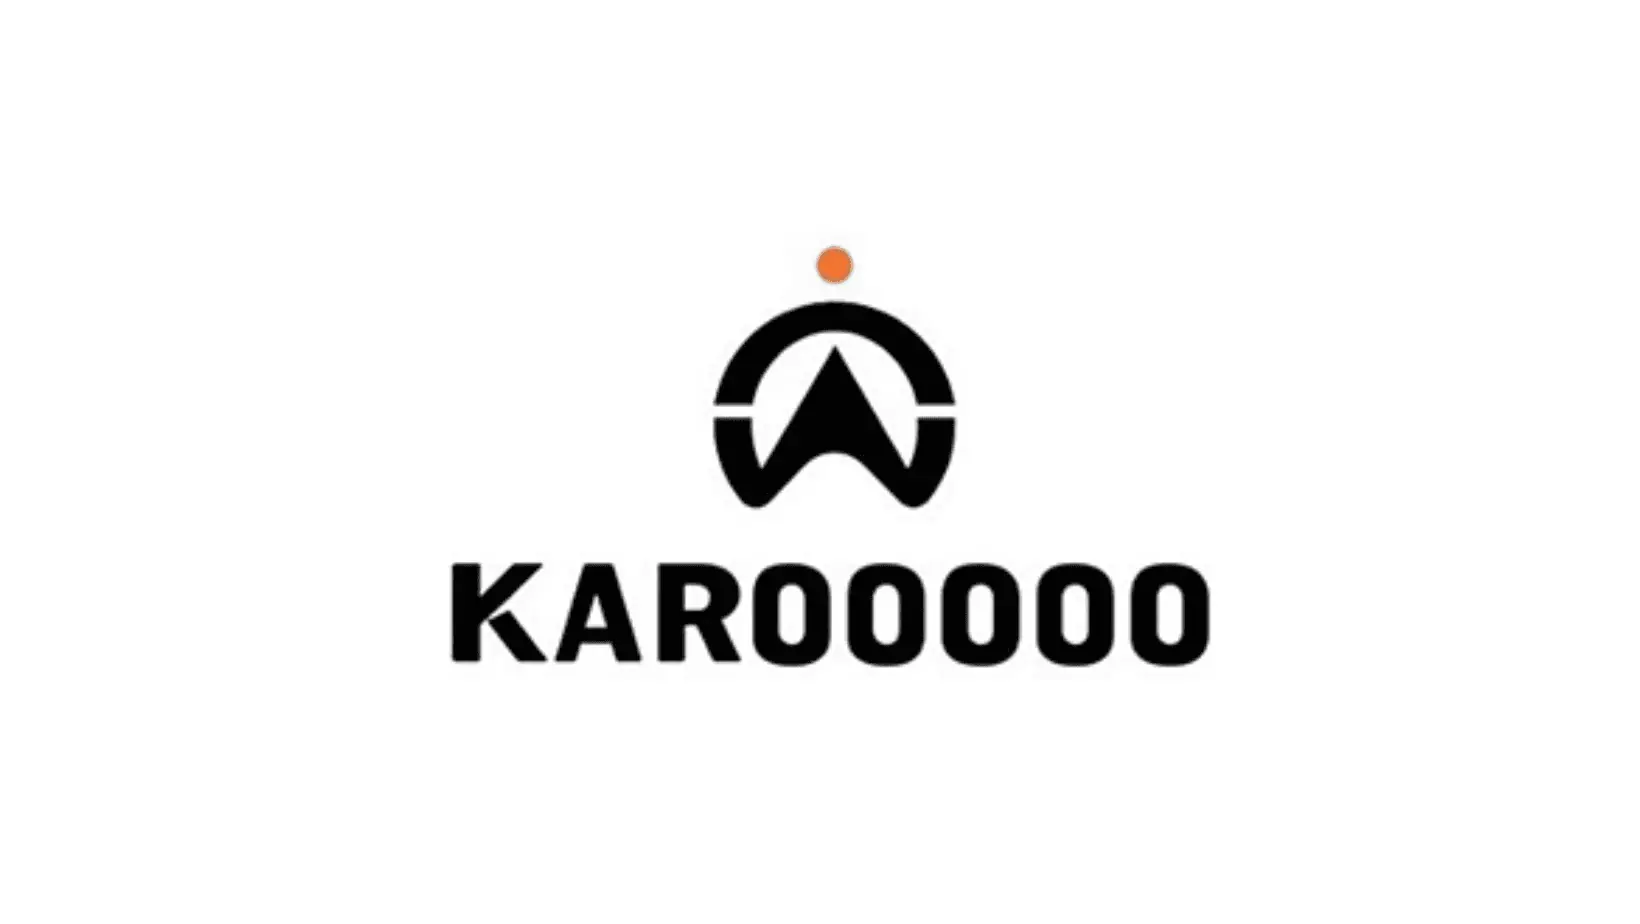 Karoooo